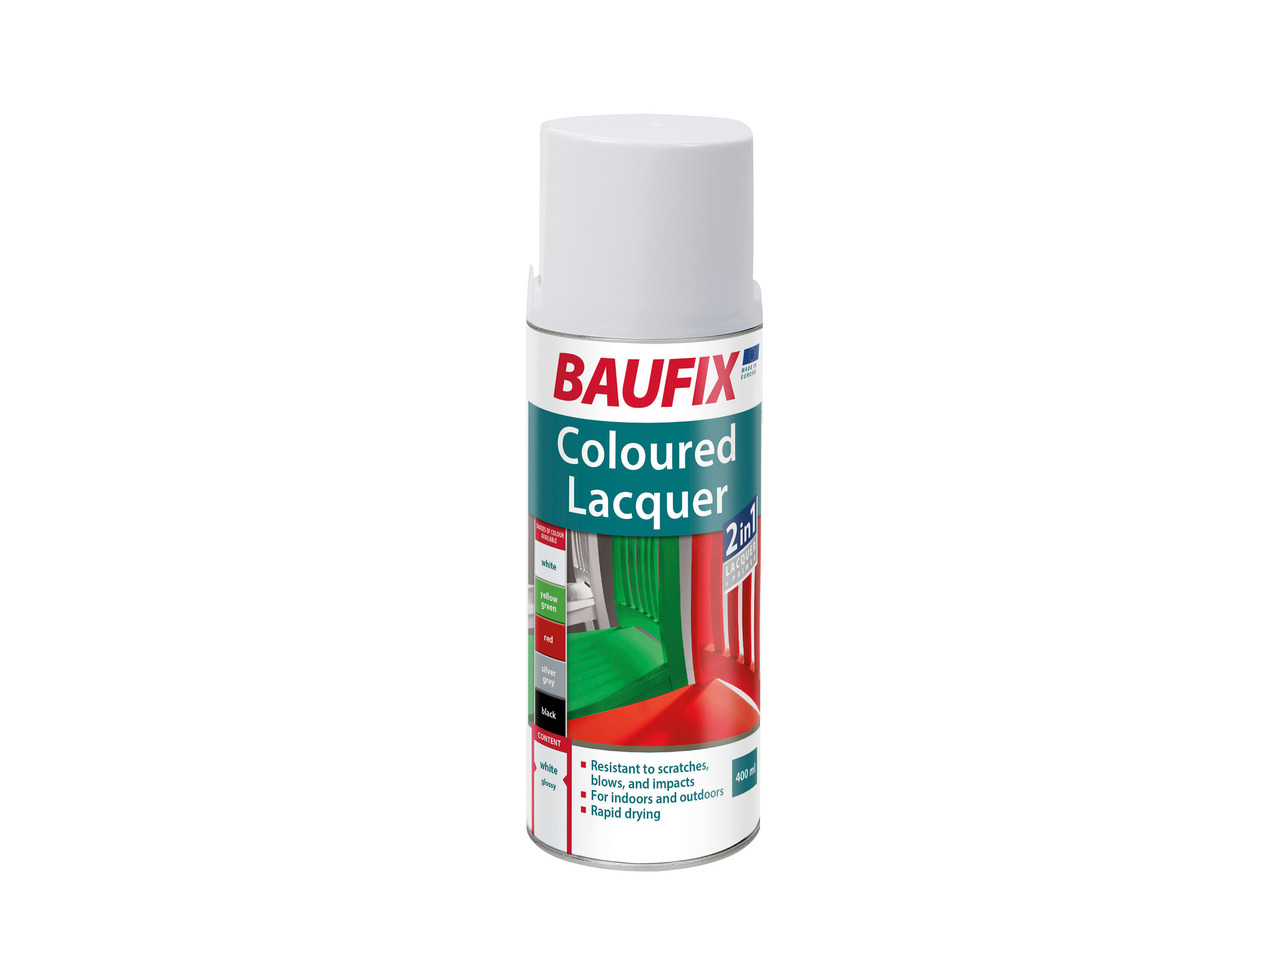 Baufix 2-in-1 Coloured Lacquer1